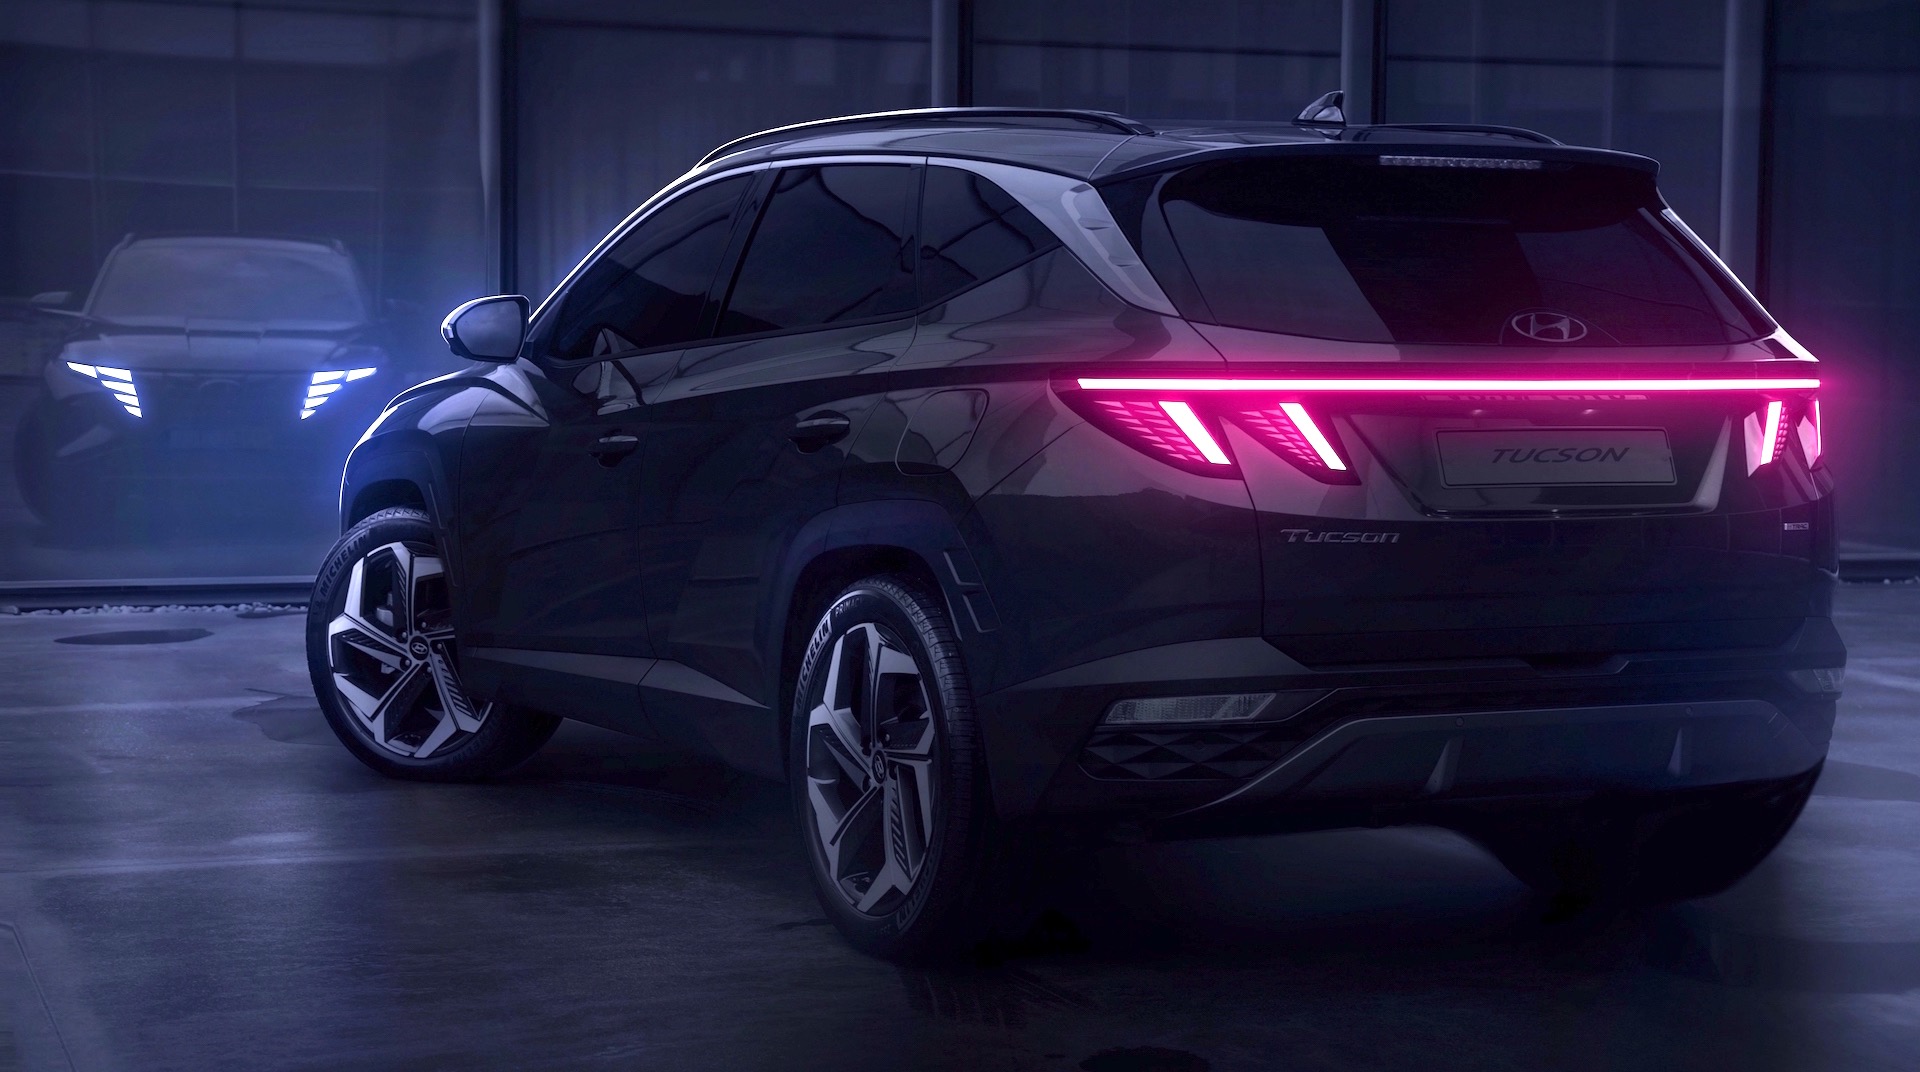 2021 Hyundai Tucson official design revealed